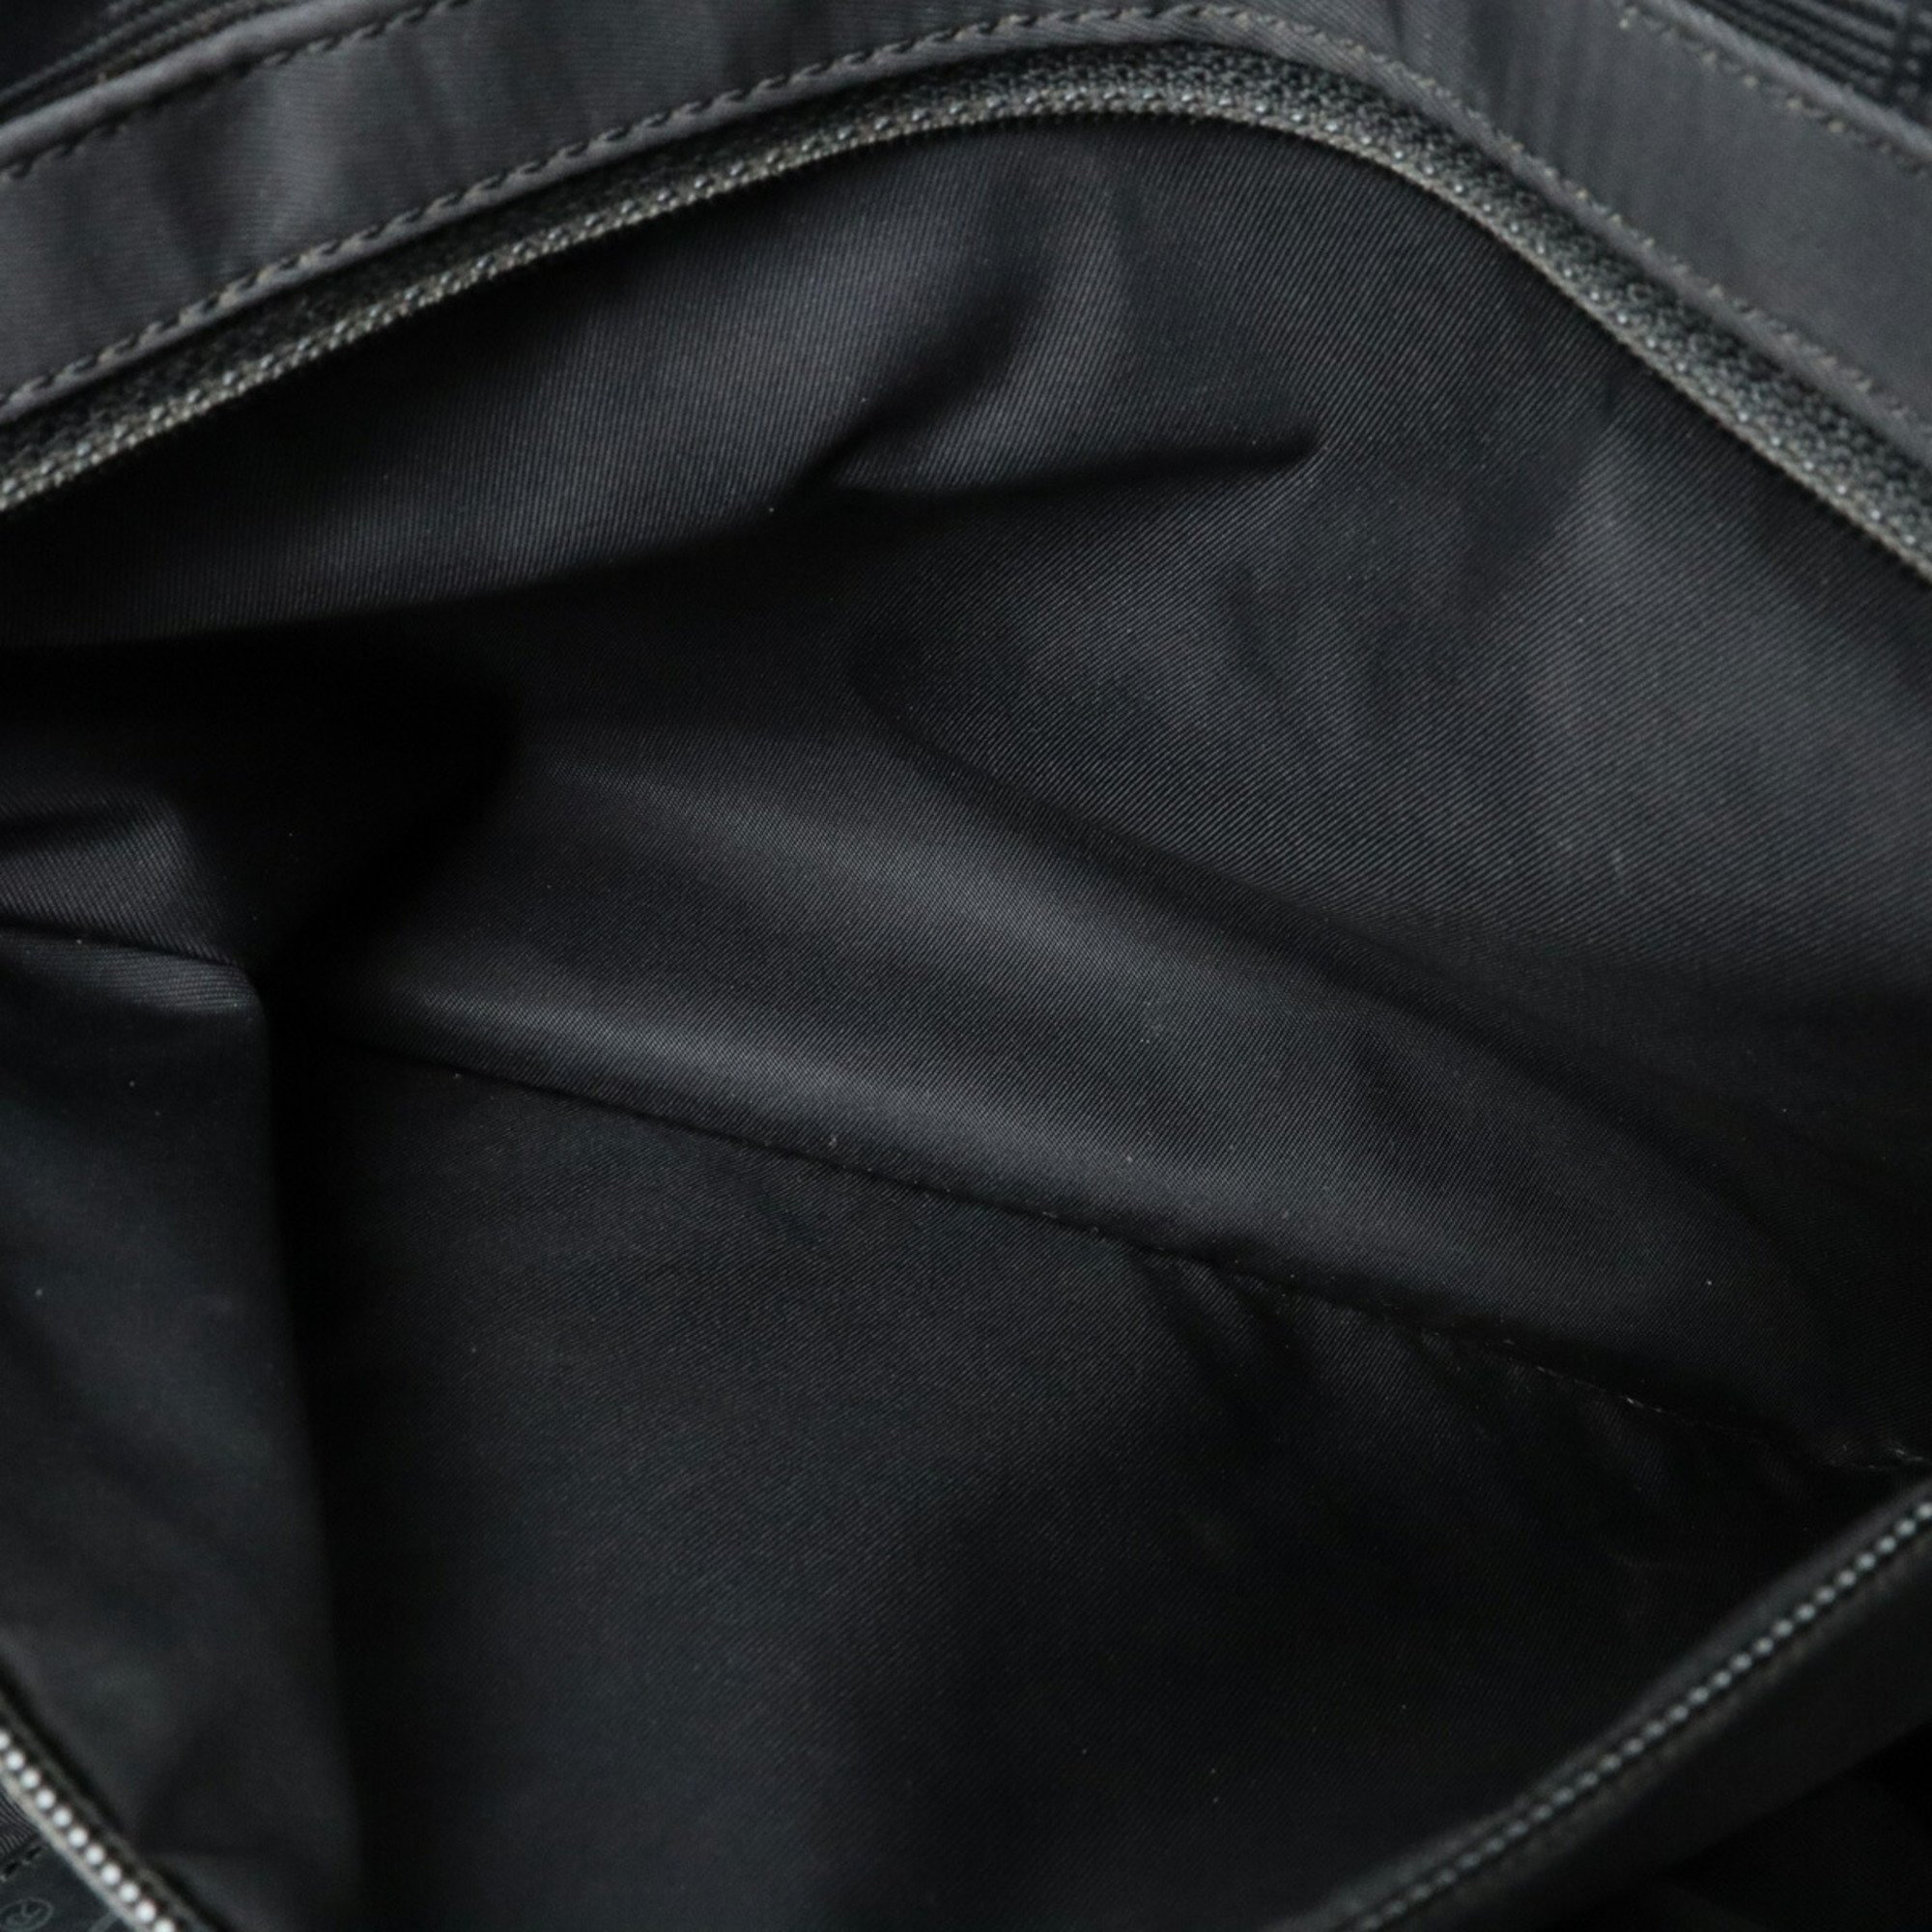 CHANEL New Travel Line Tote PM Bag Shoulder Nylon Leather Black A20457